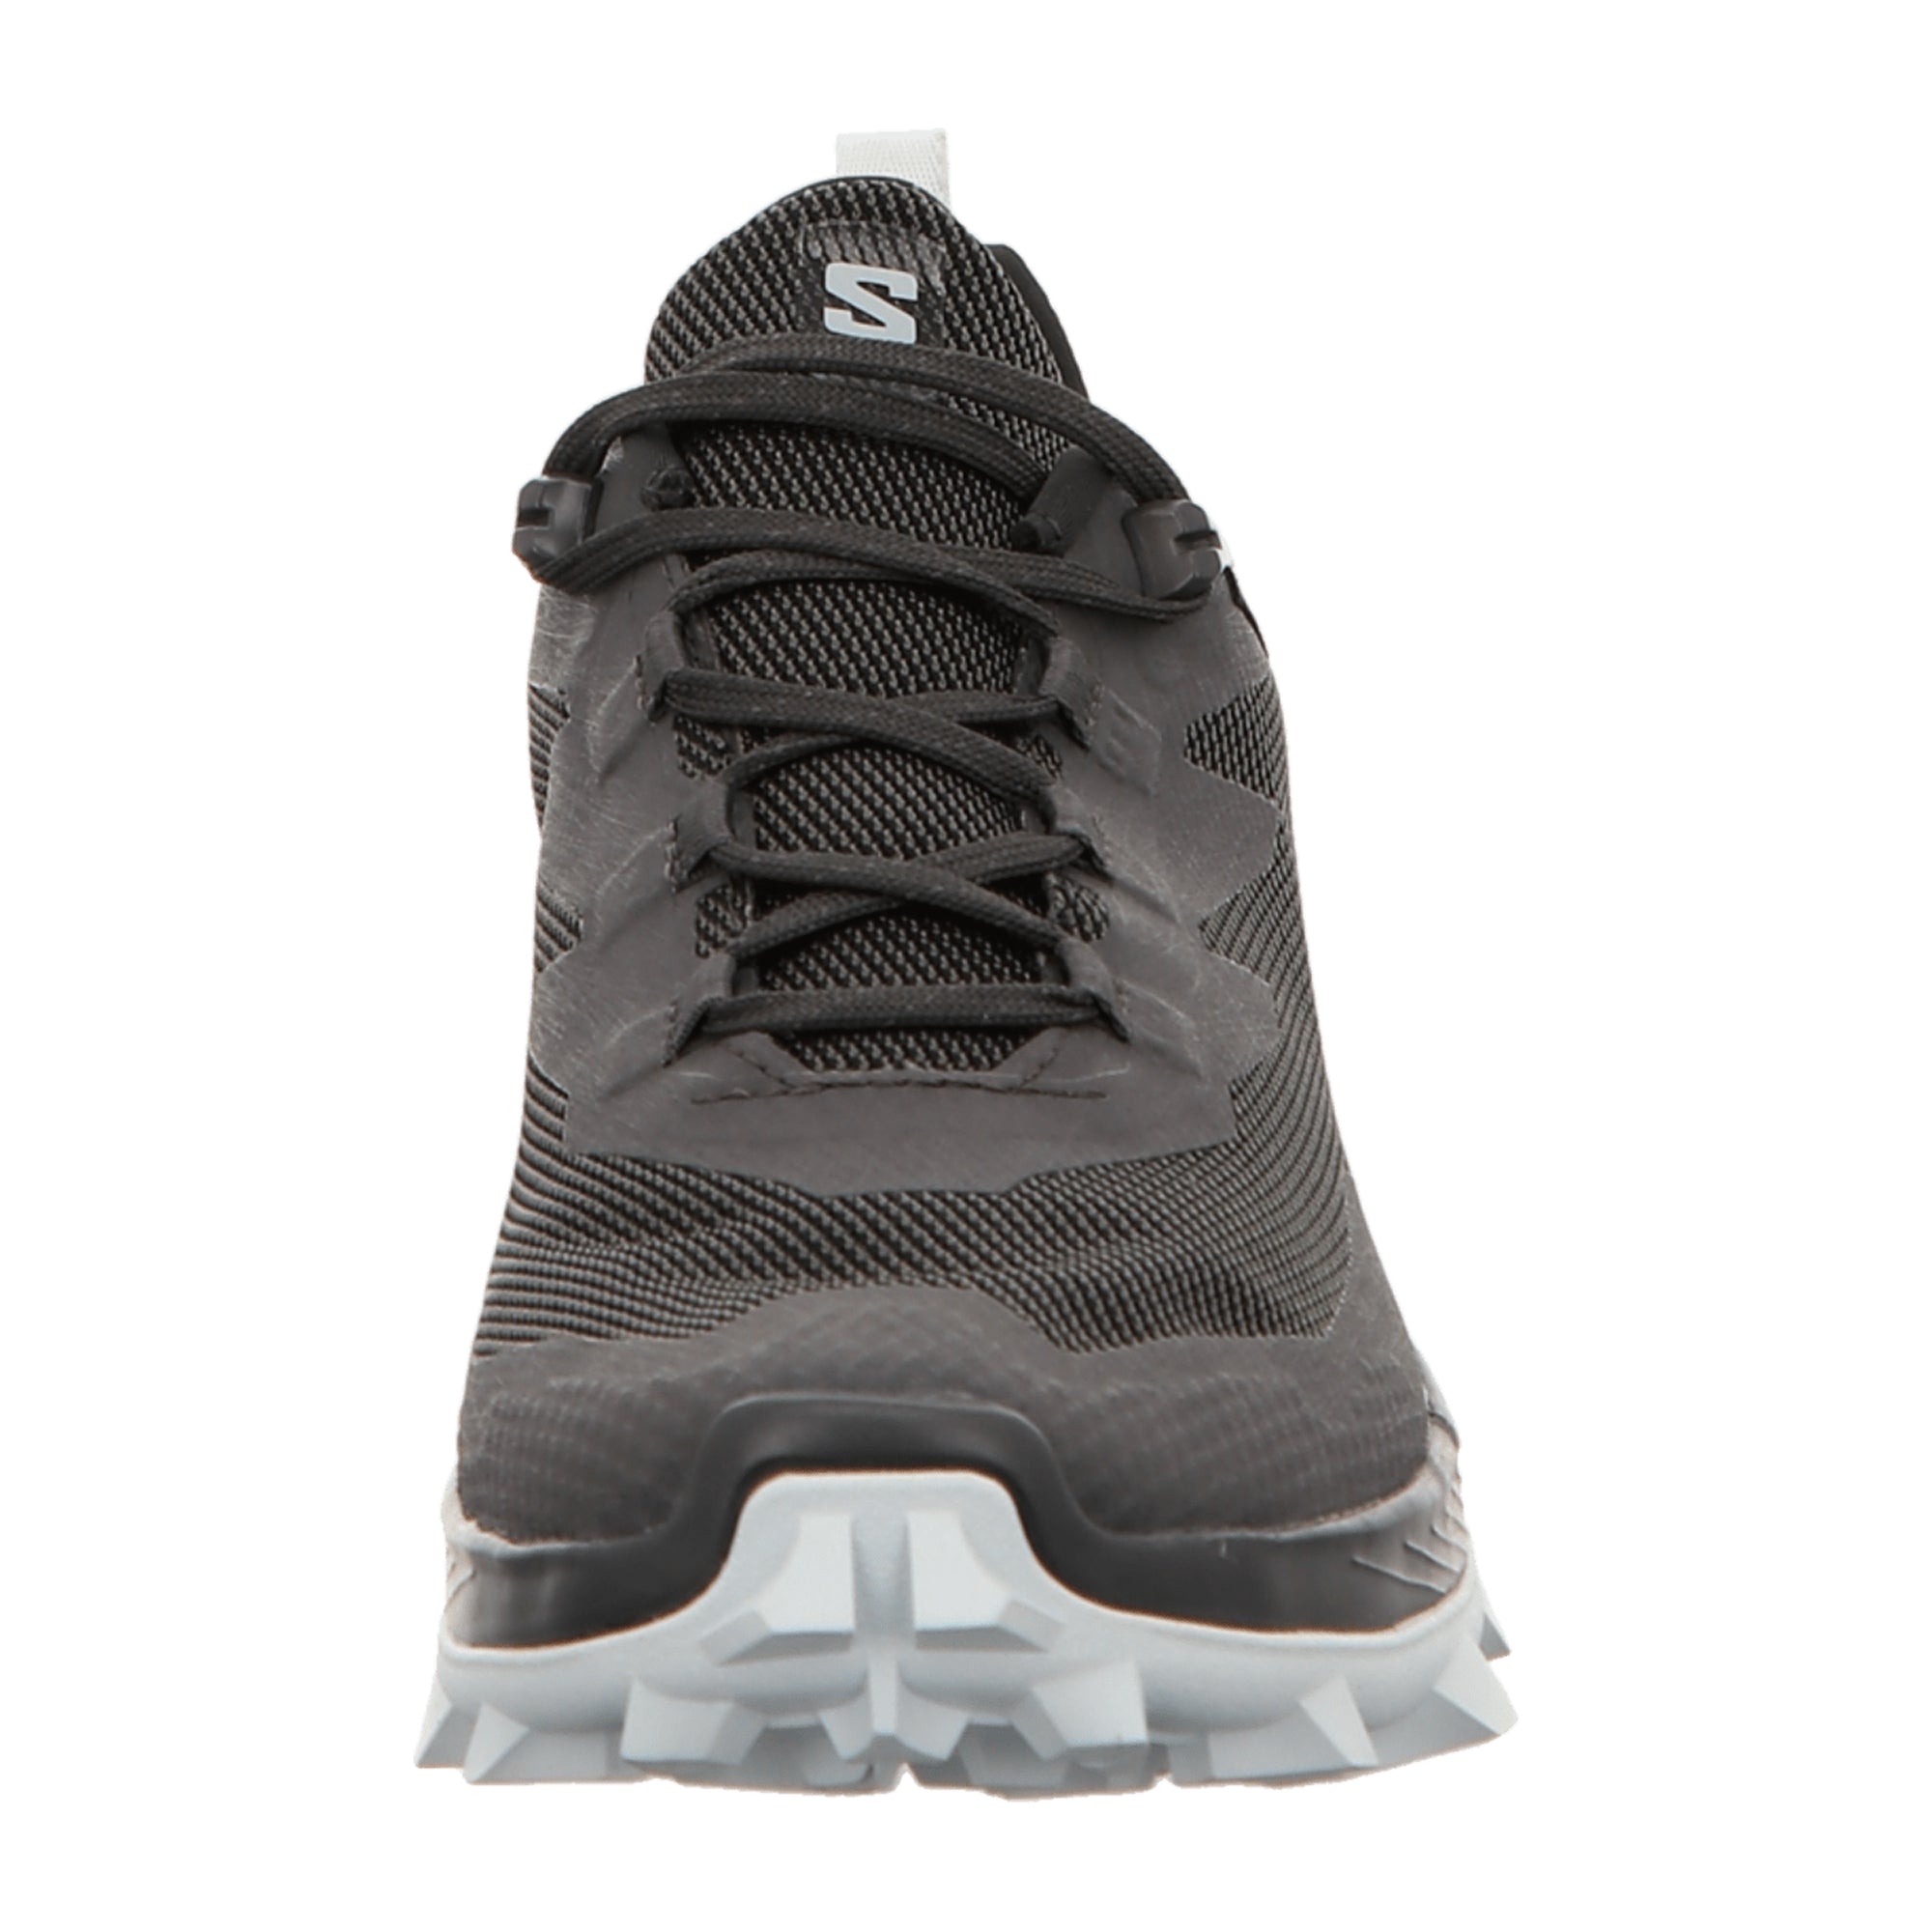 Salomon CROSS OVER 2 GTX W for women, gray, shoes